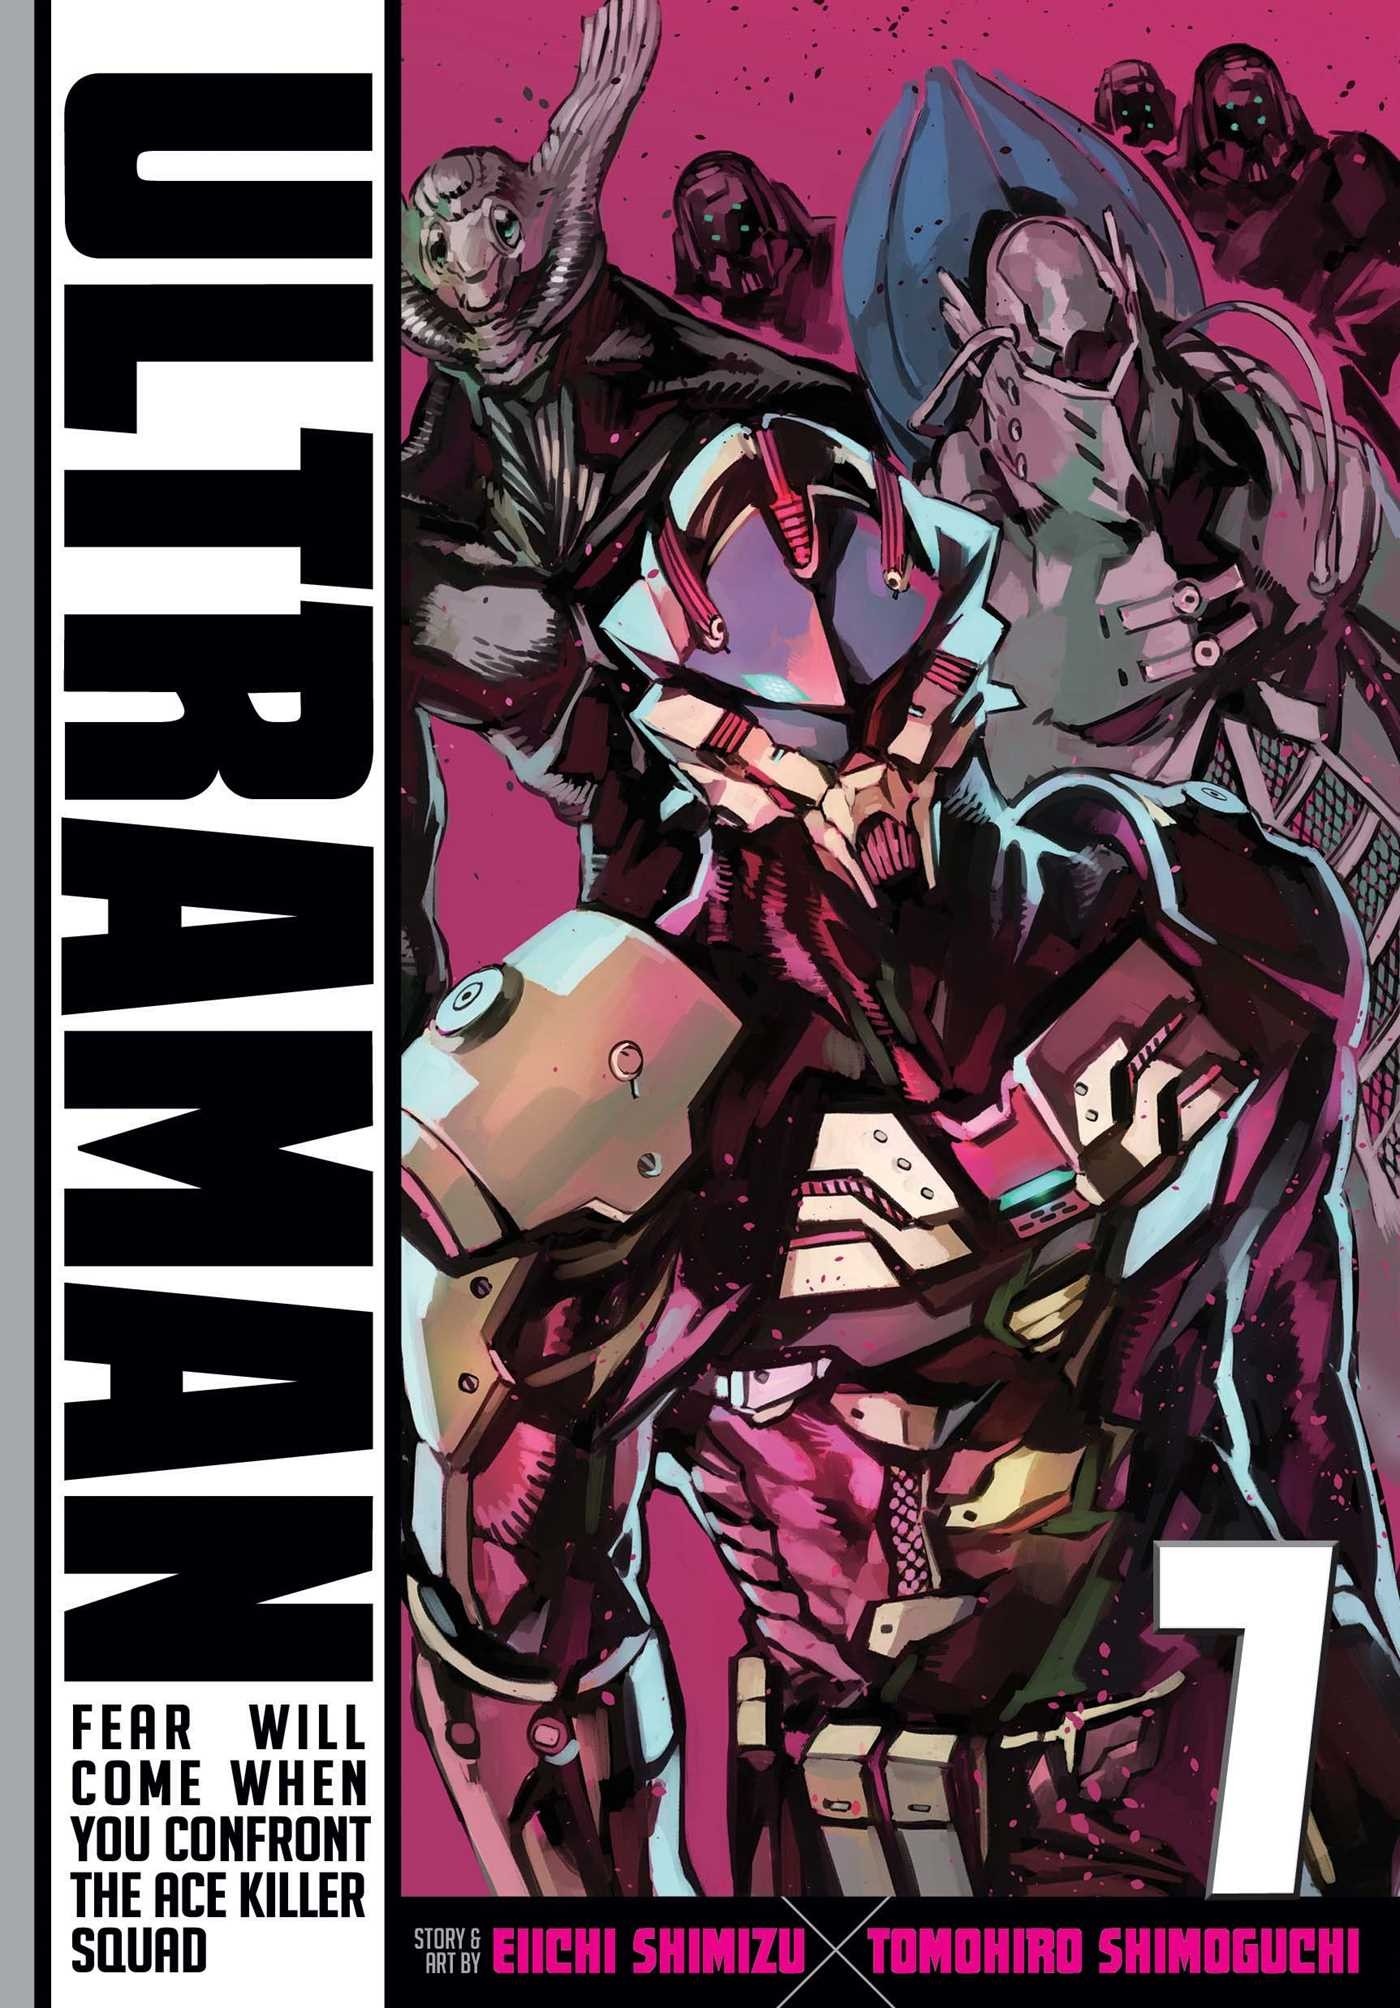 Ultraman, Vol. 07